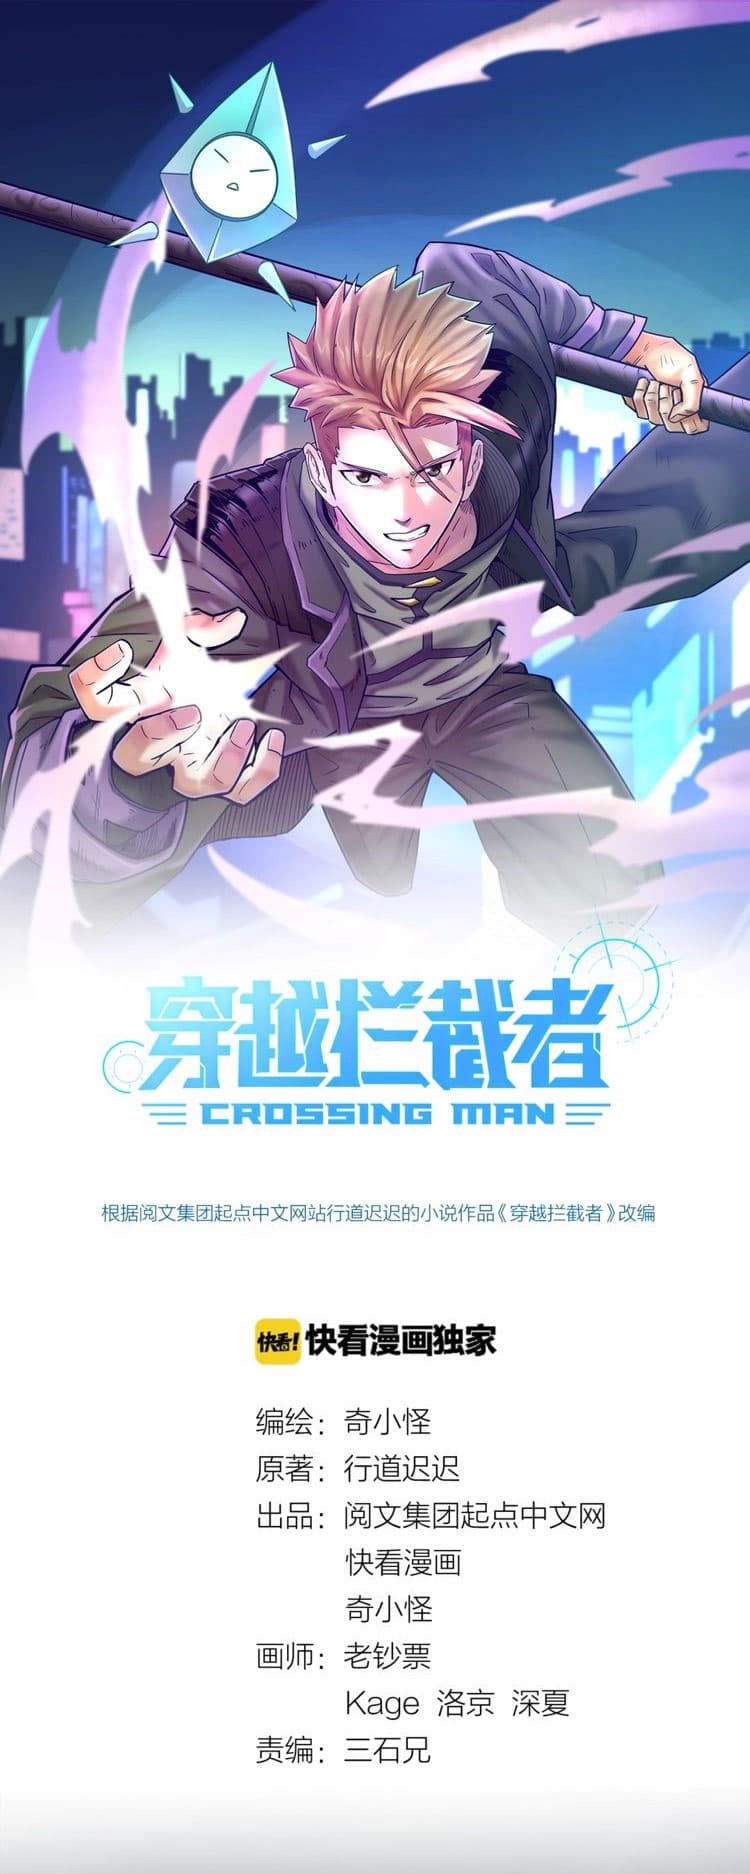 Crossing Man17 (1)